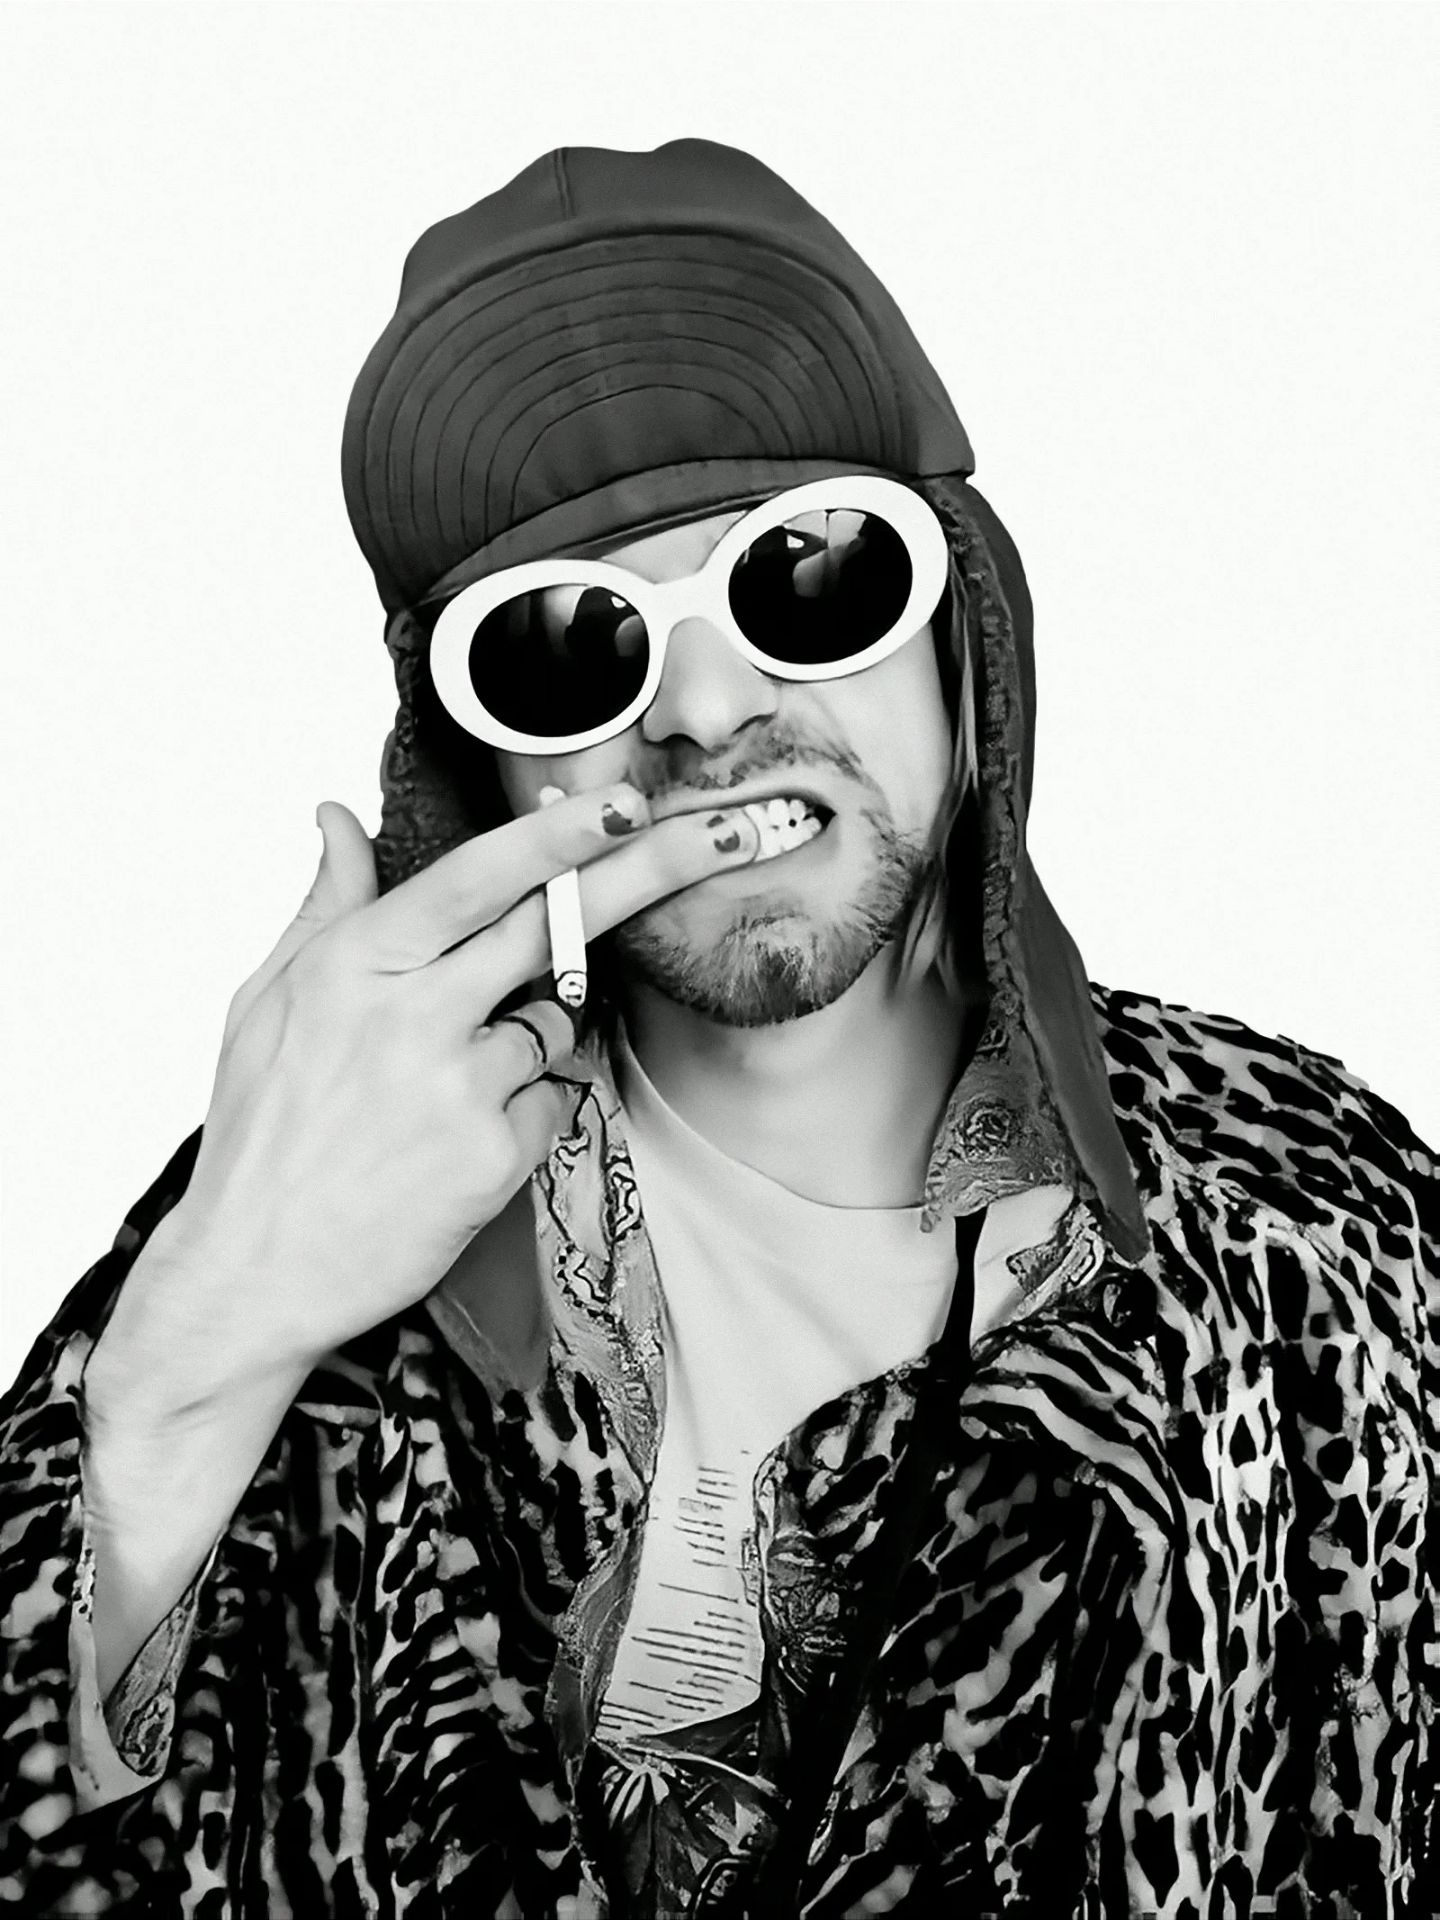 Kurt Cobain "Smoking" Print